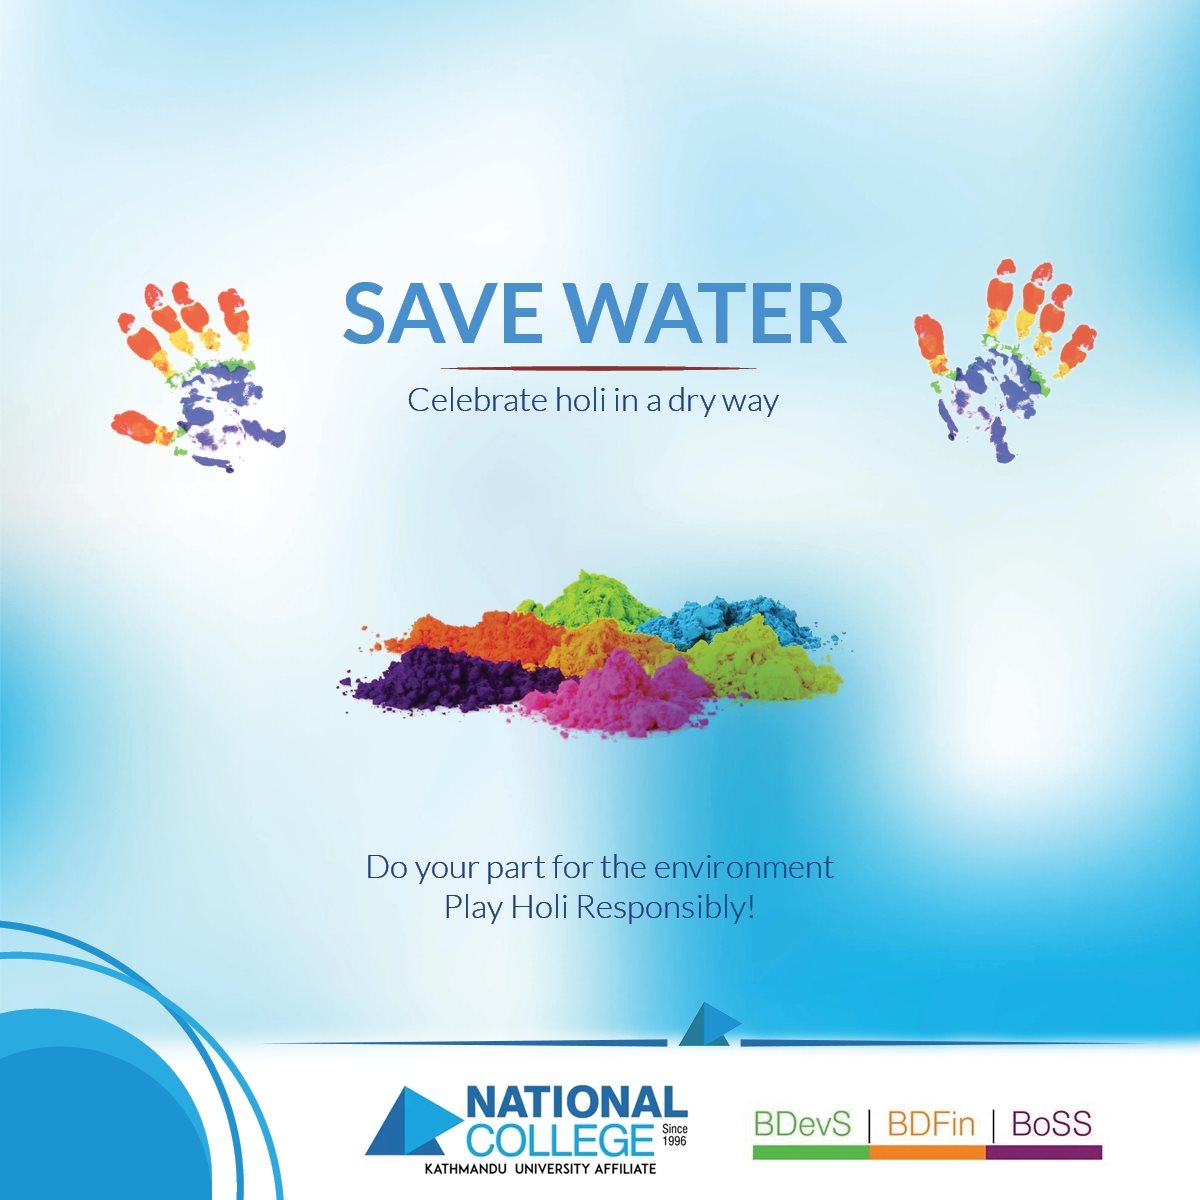 Save water, celebrate dry holi